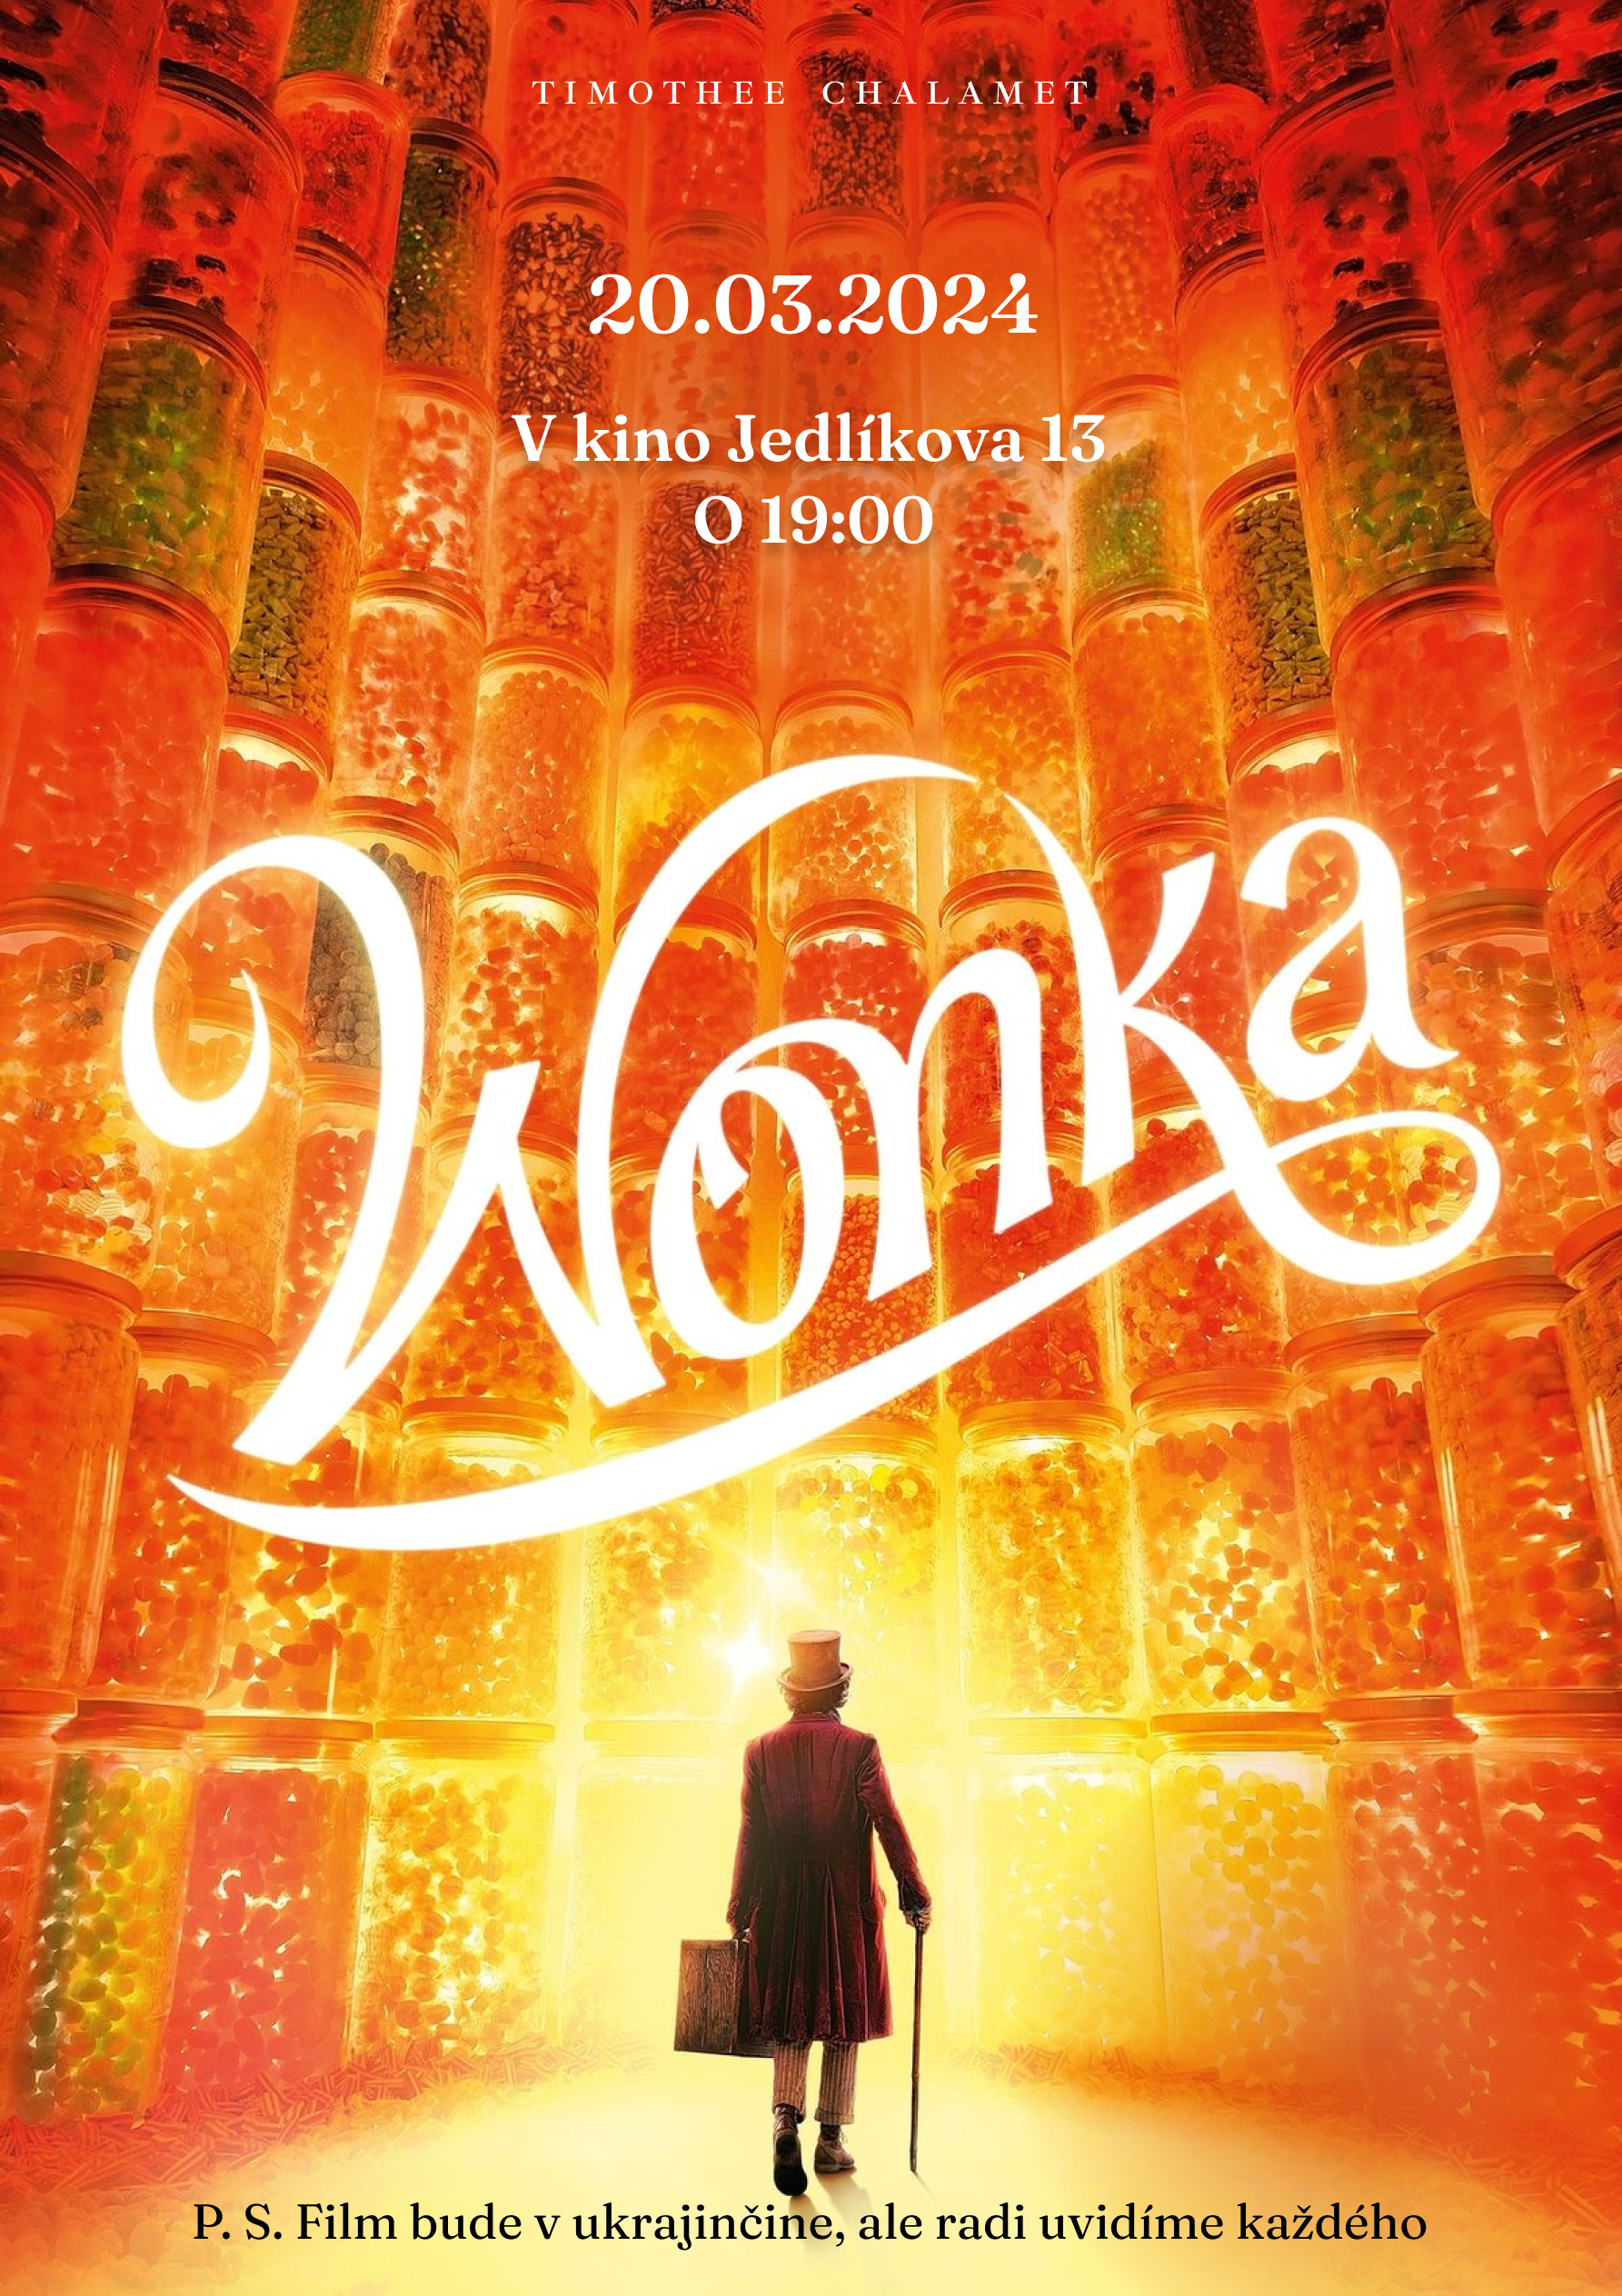 Wonka v Kine J13!